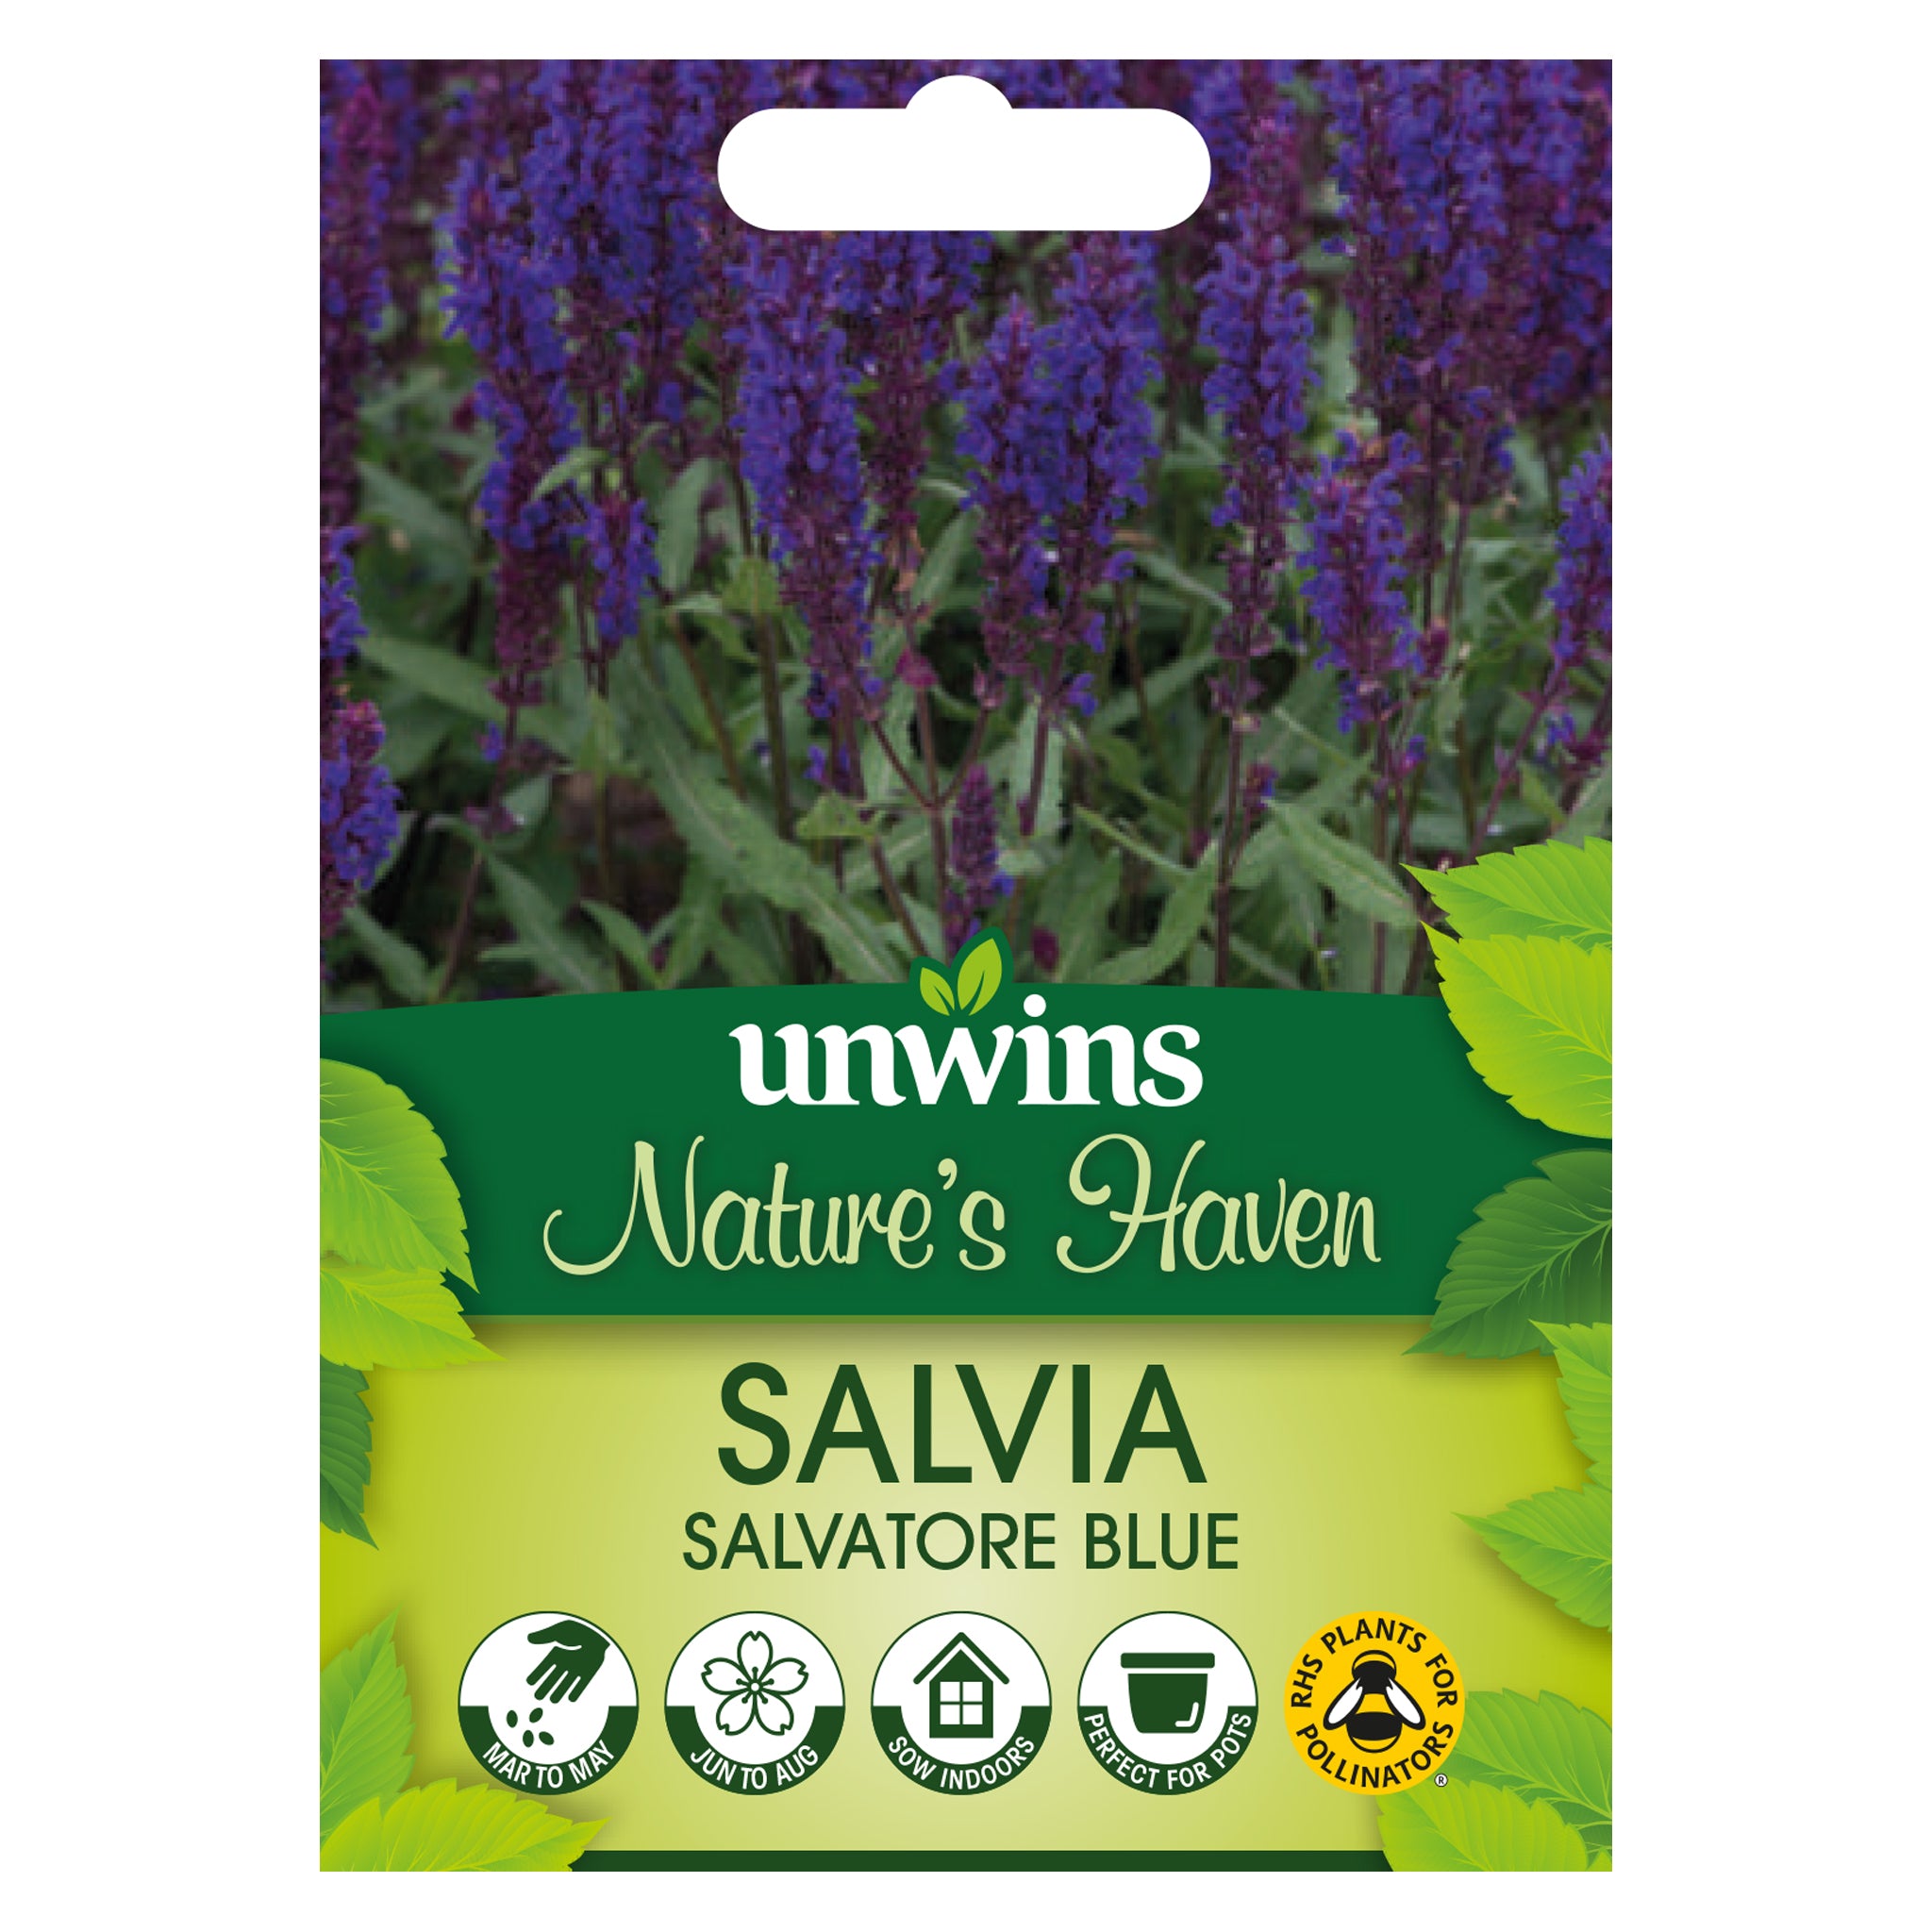 Nature's Haven Salvia Salvatore Blue Seeds